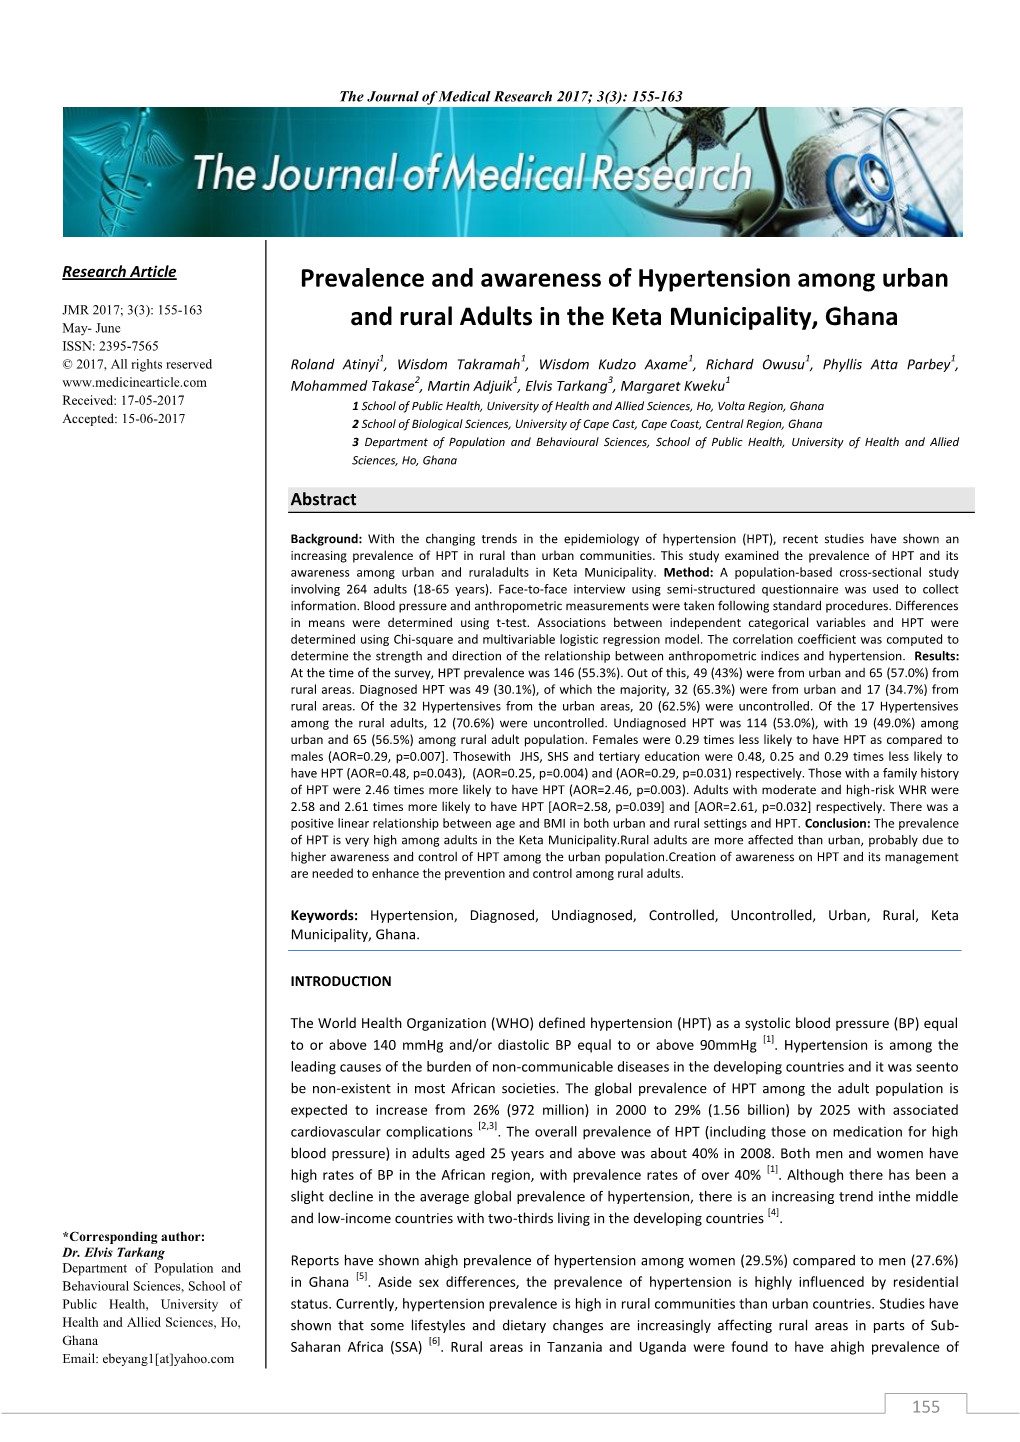 Prevalence and Awareness of Hypertension Among Urban And